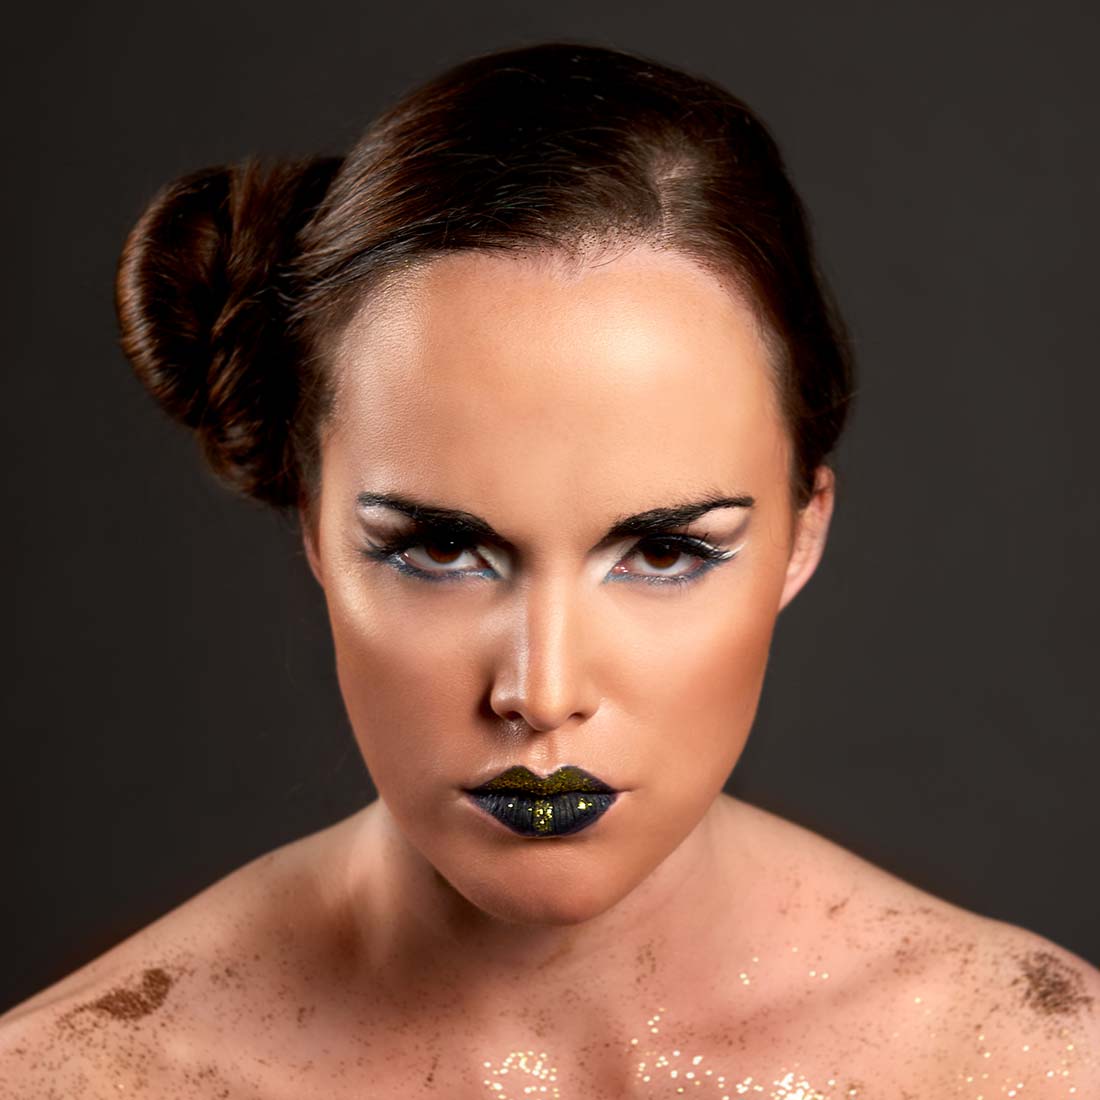 Portraitfotos – Beautyshot Rebekka mit Goldglitter